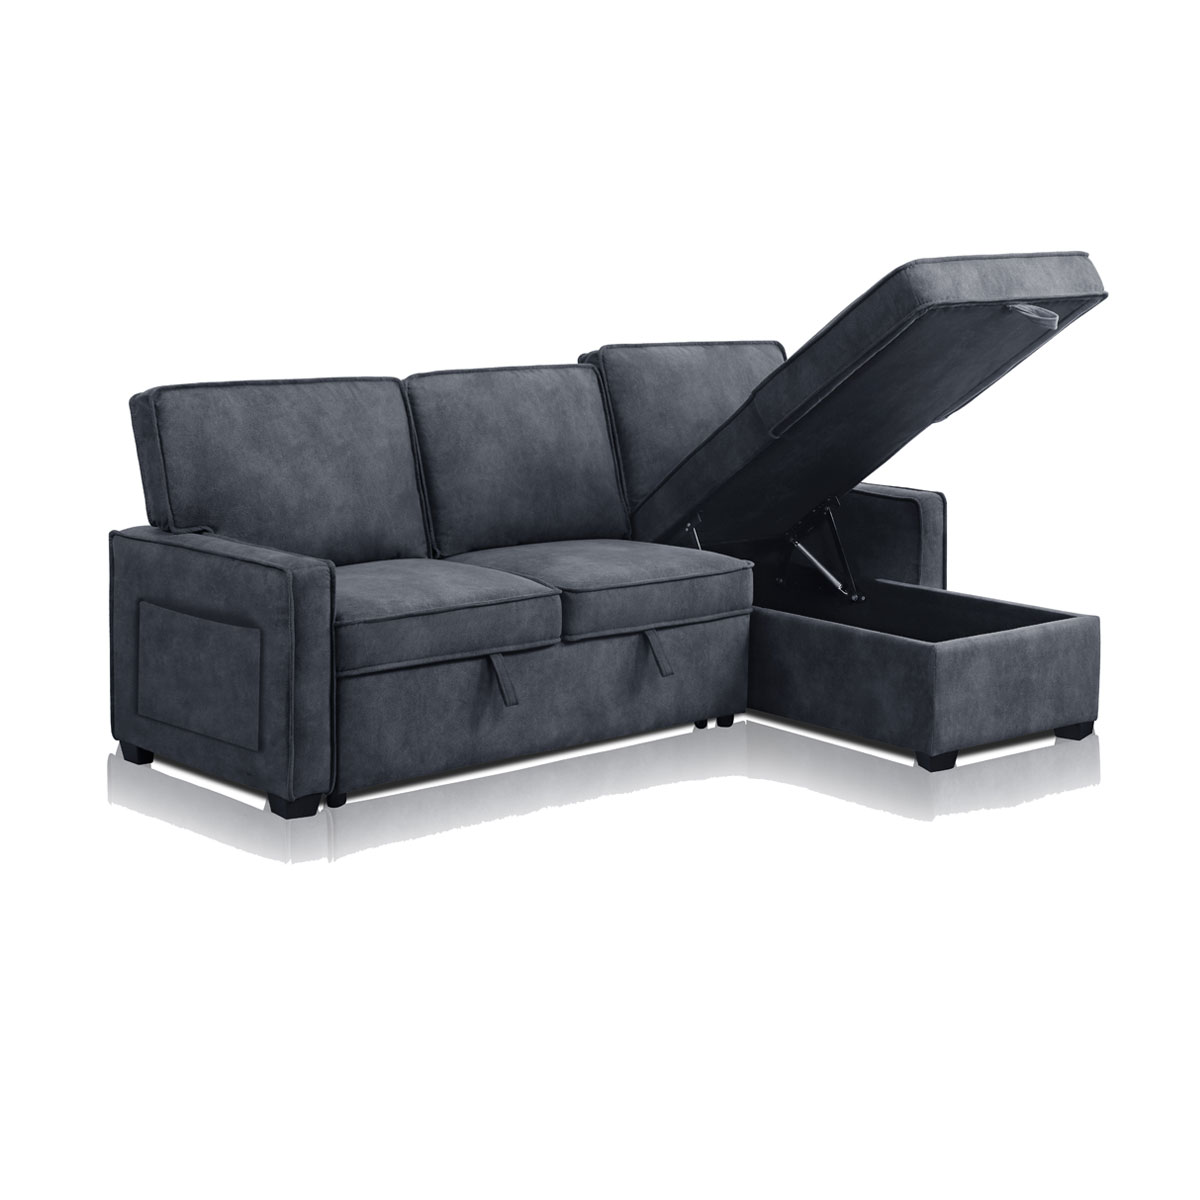 Sofa Sets